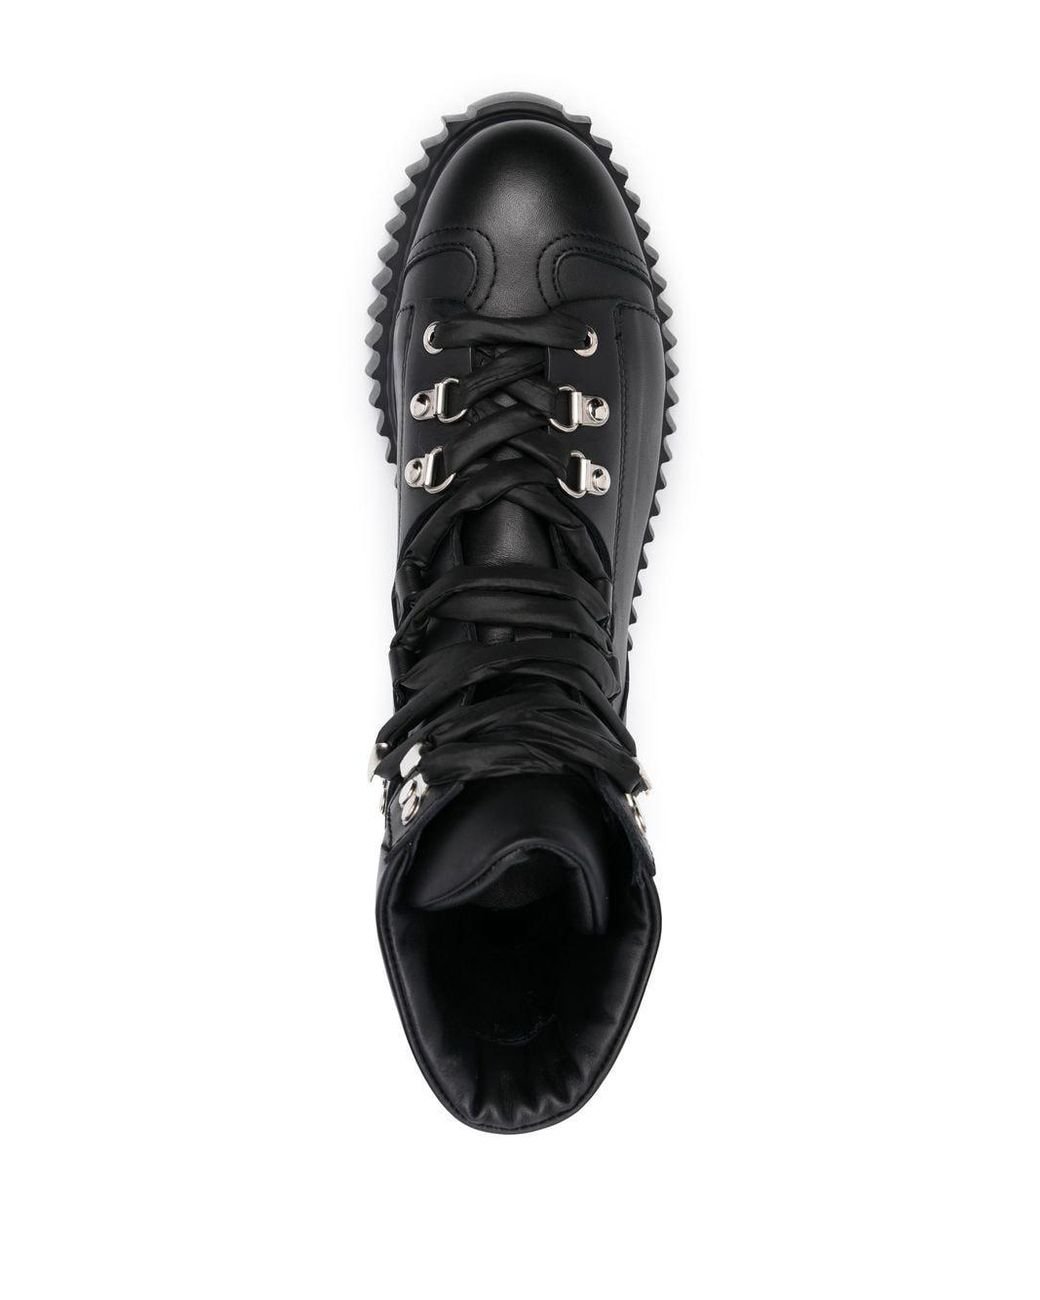 Agl Attilio Giusti Leombruni Iggy Lace-up Fastening Boots in Black | Lyst